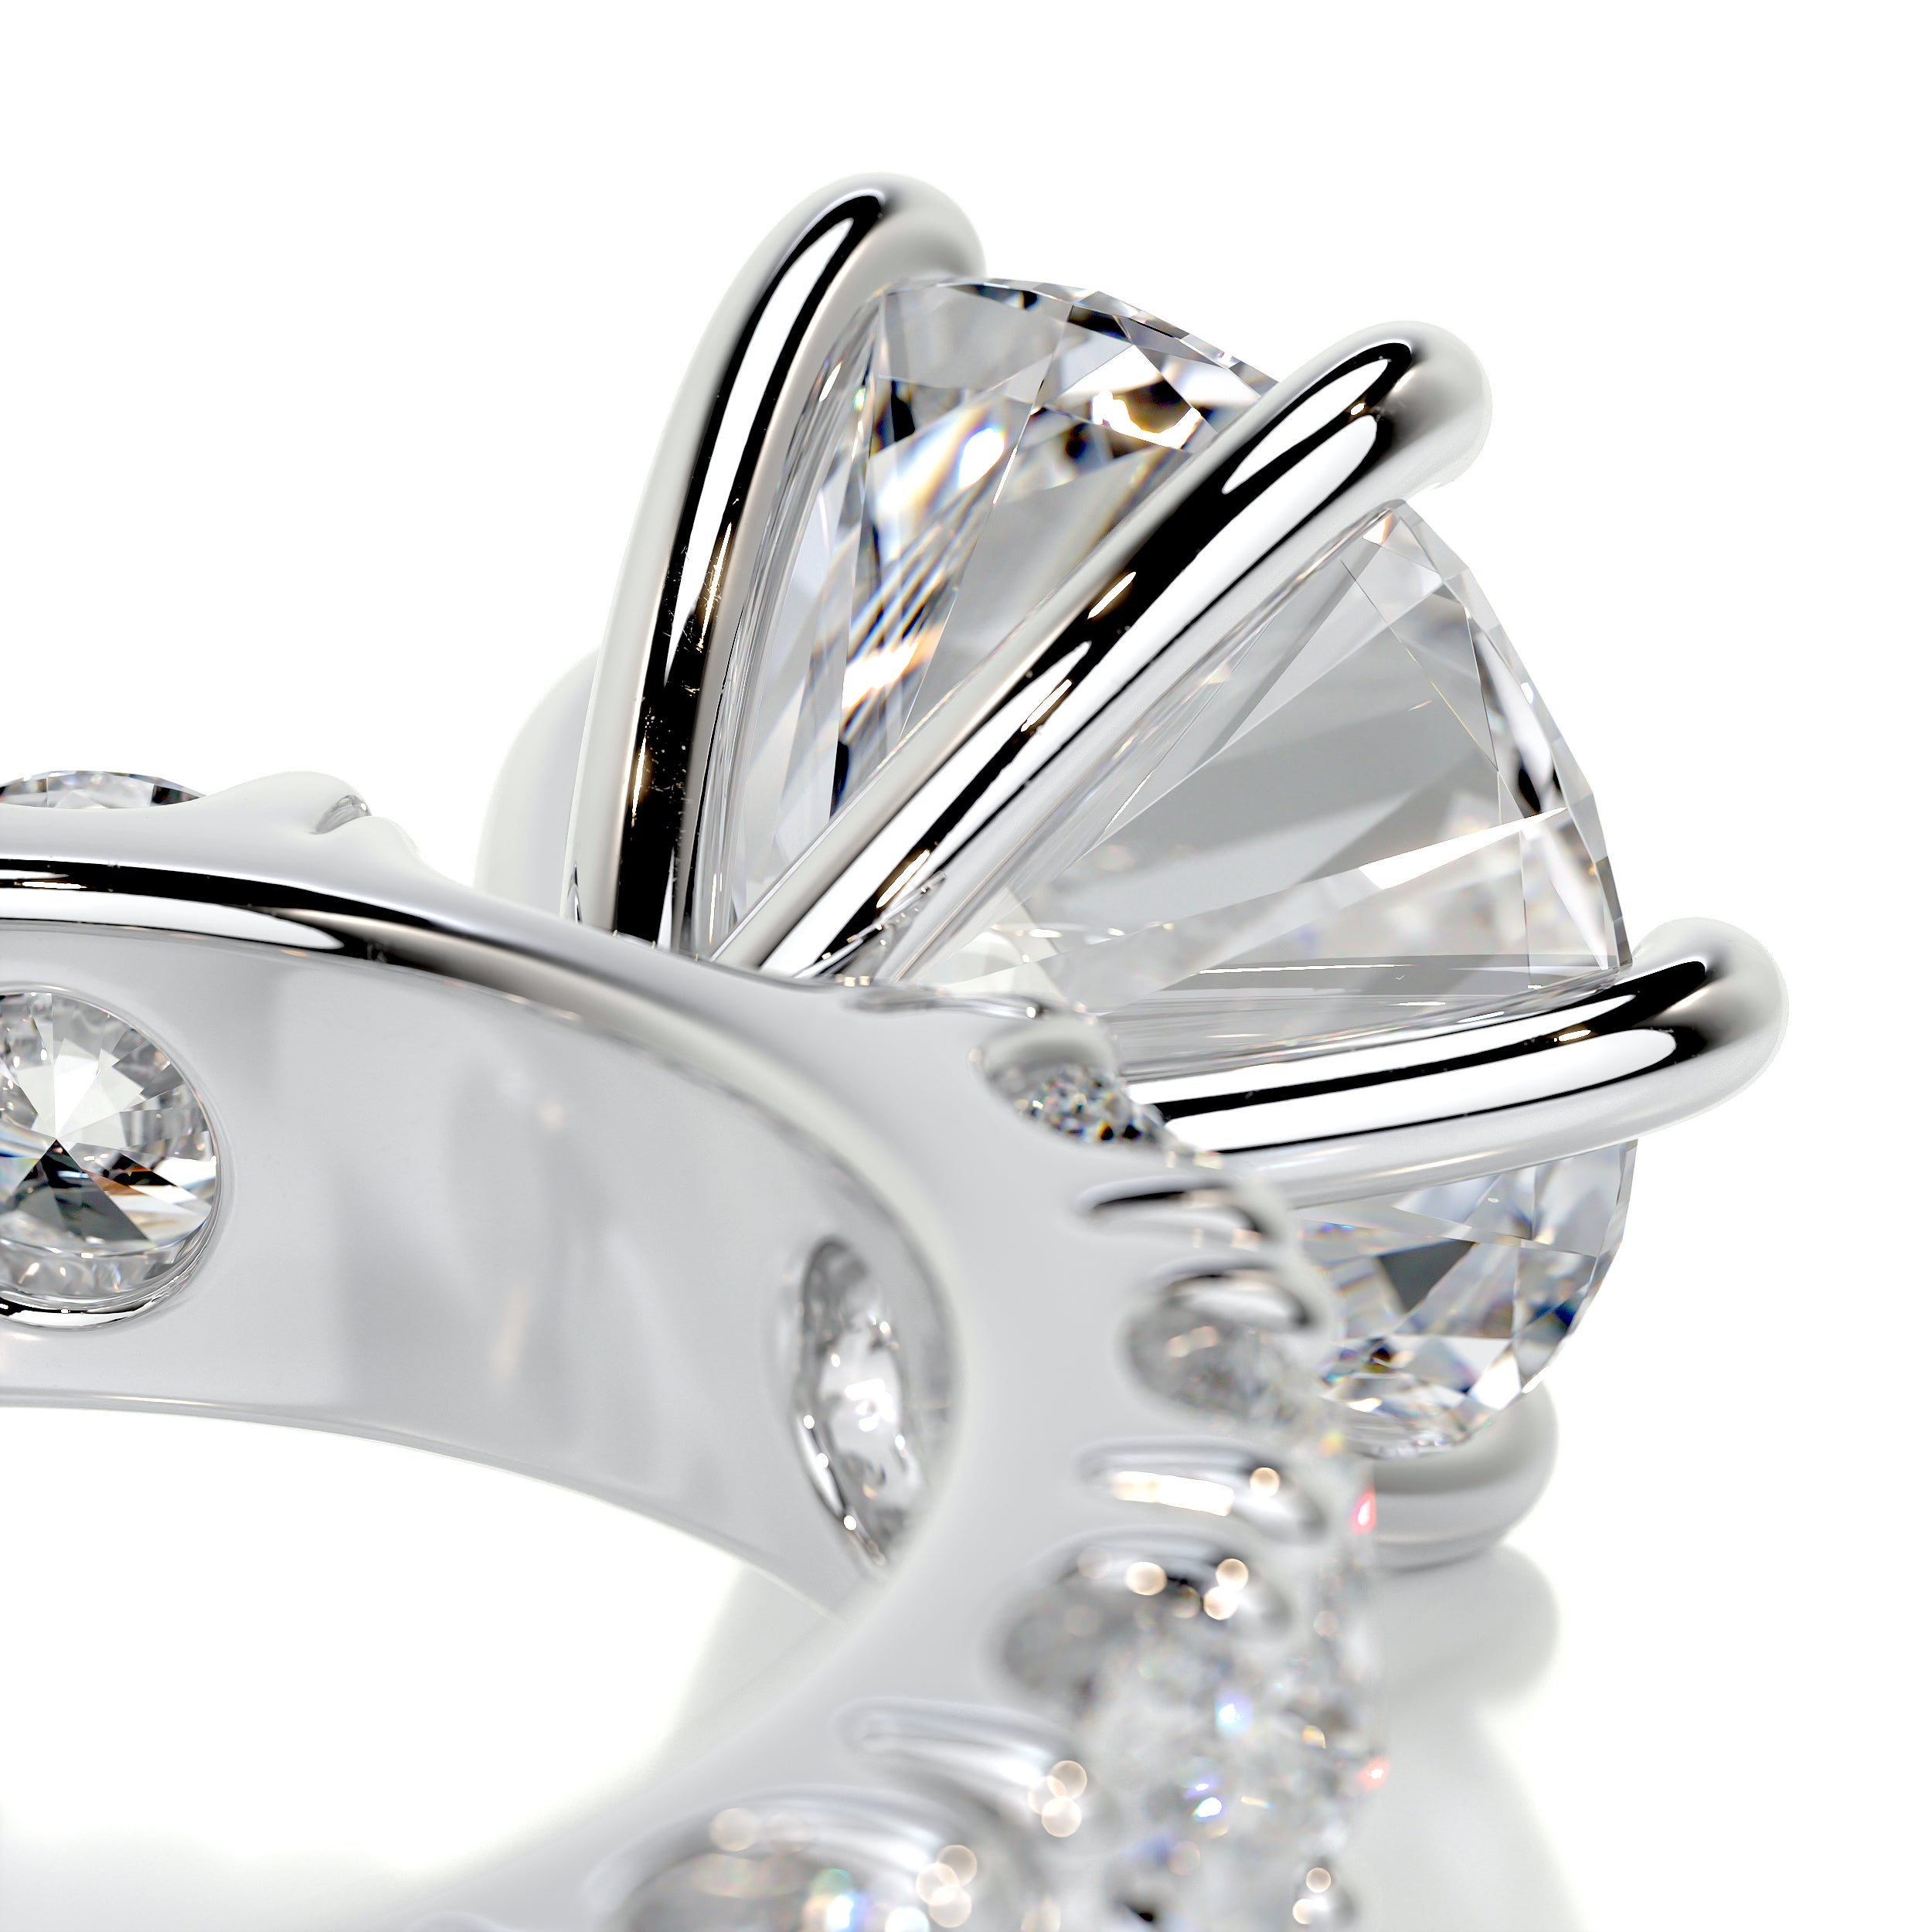 Molly Diamond Engagement Ring -14K White Gold